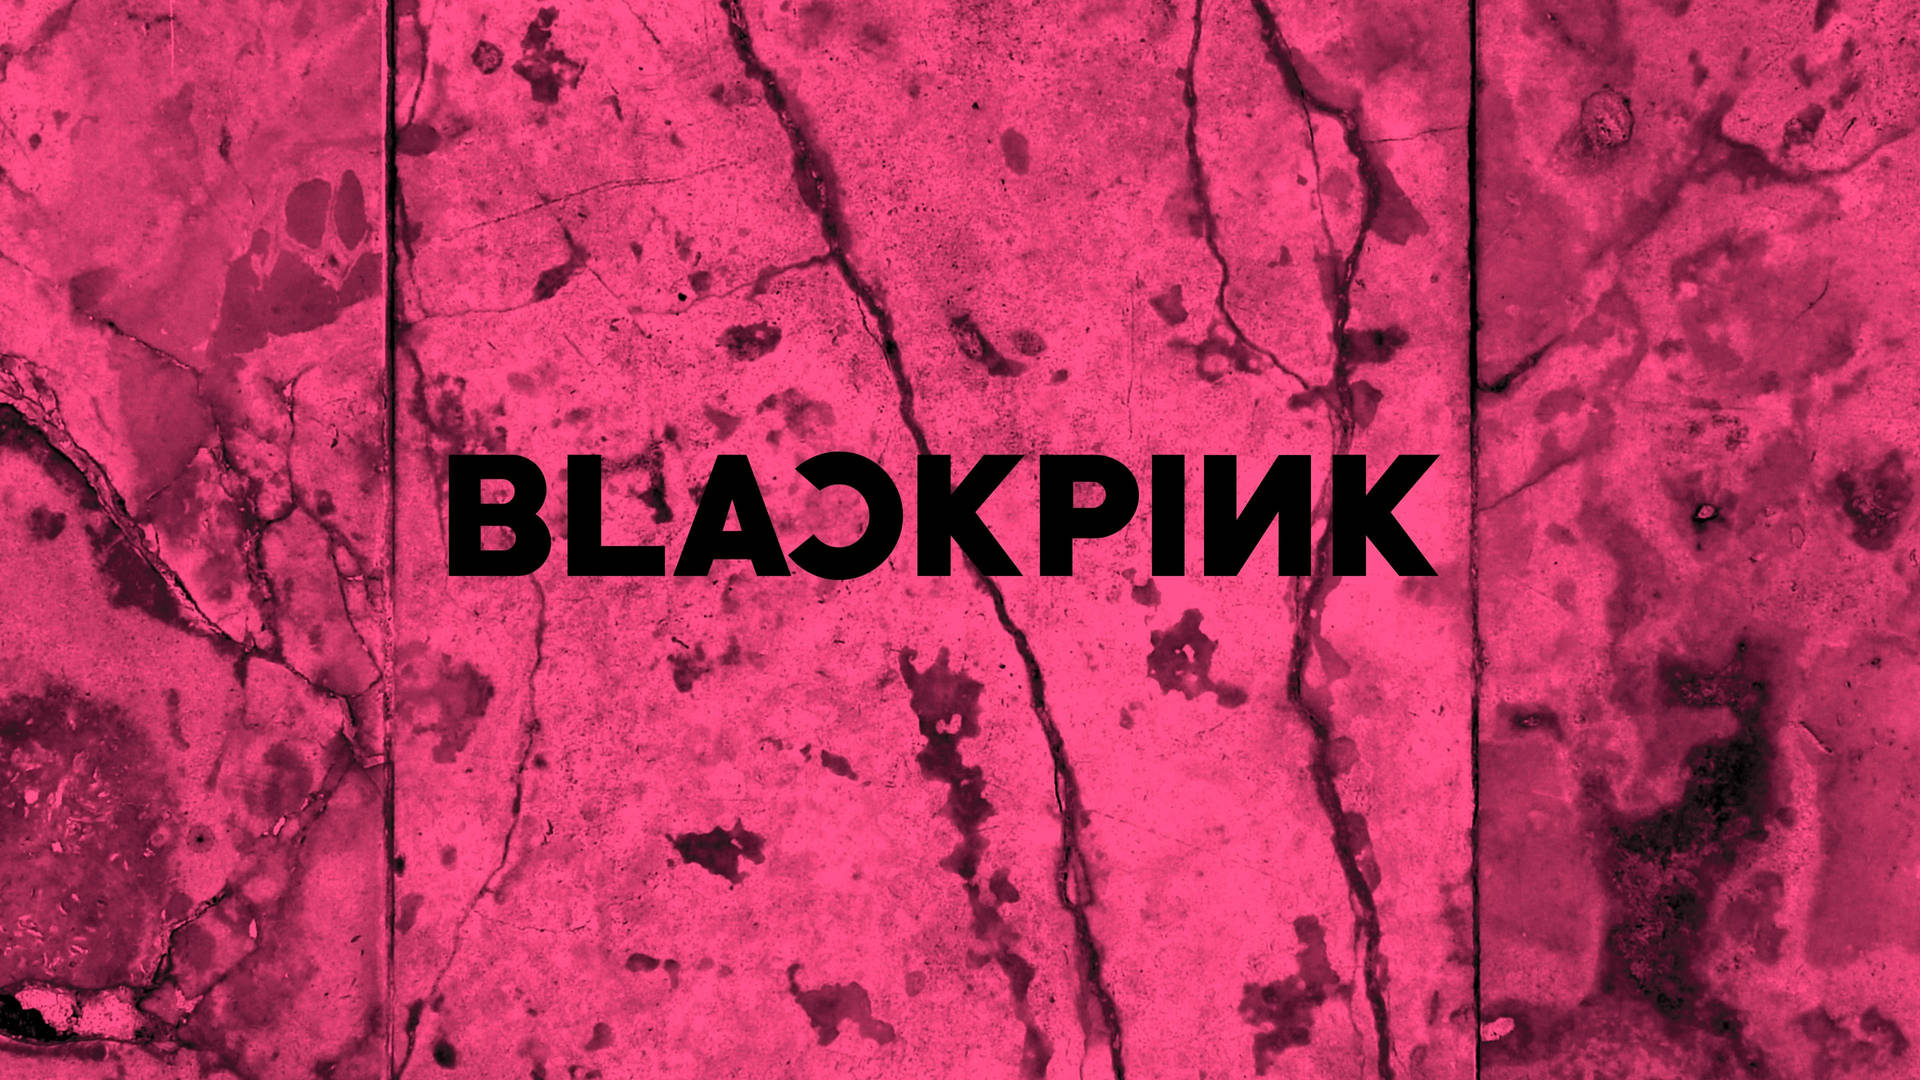 Blackpink Logo On Cool Pink Wall Wallpaper